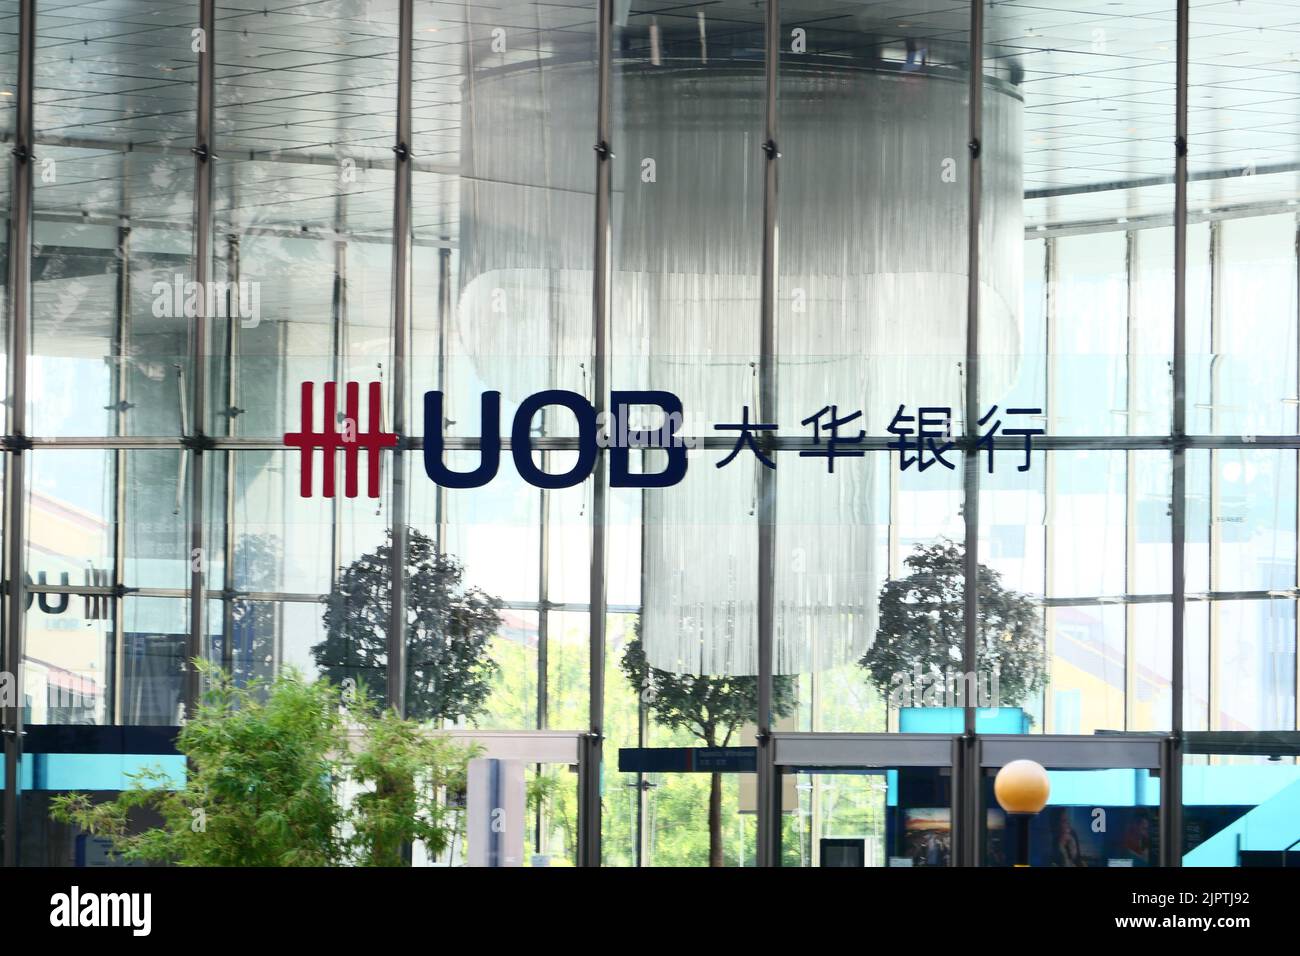 Singapore 1 june 202 UOB bank logo on financial building Stock Photo